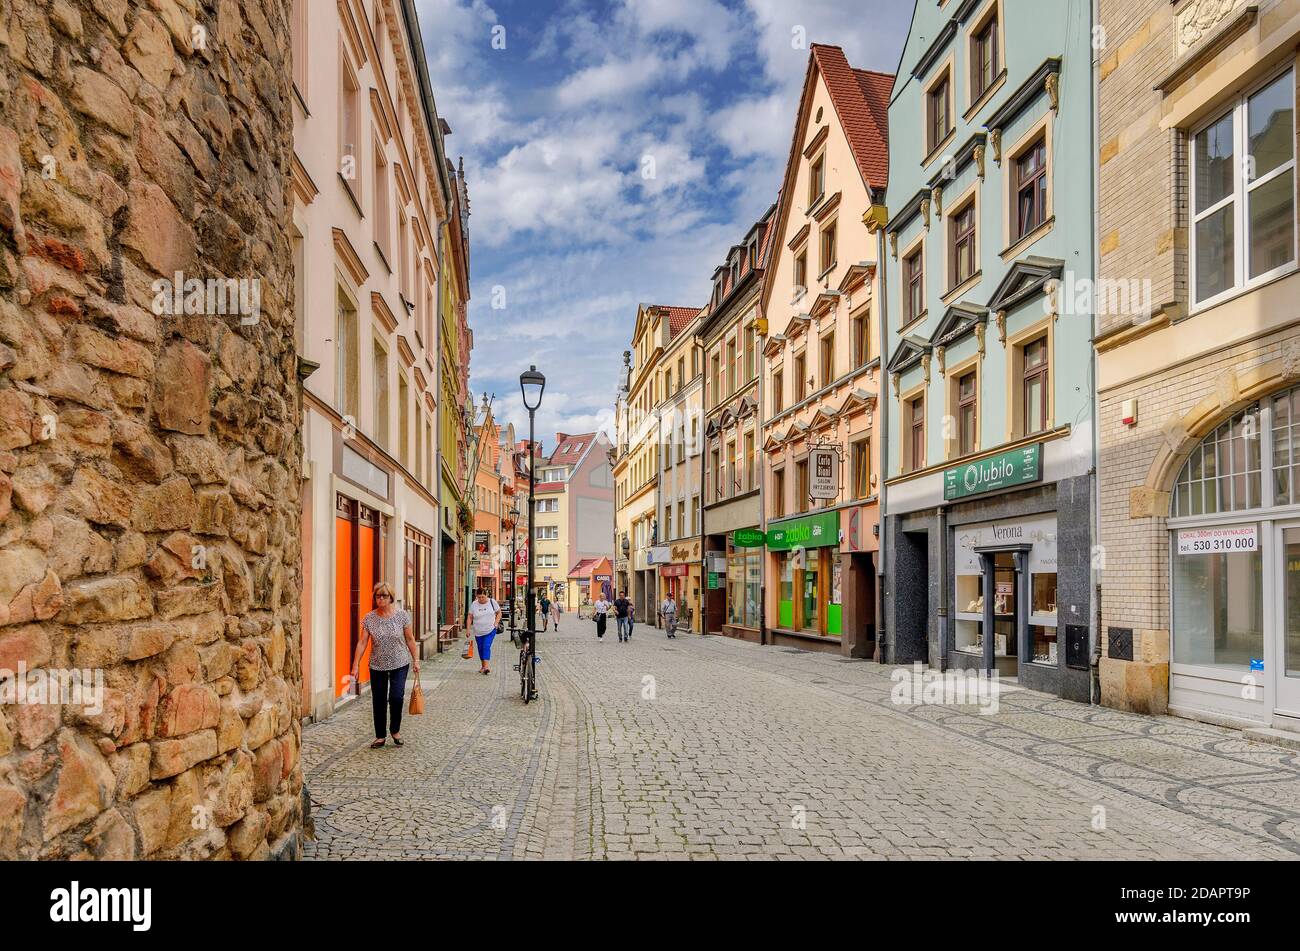 1st May street, city of Jelenia Gora, (ger.: Hirschberg im Riesengebirge), Lower Silesia province, Poland. Stock Photo